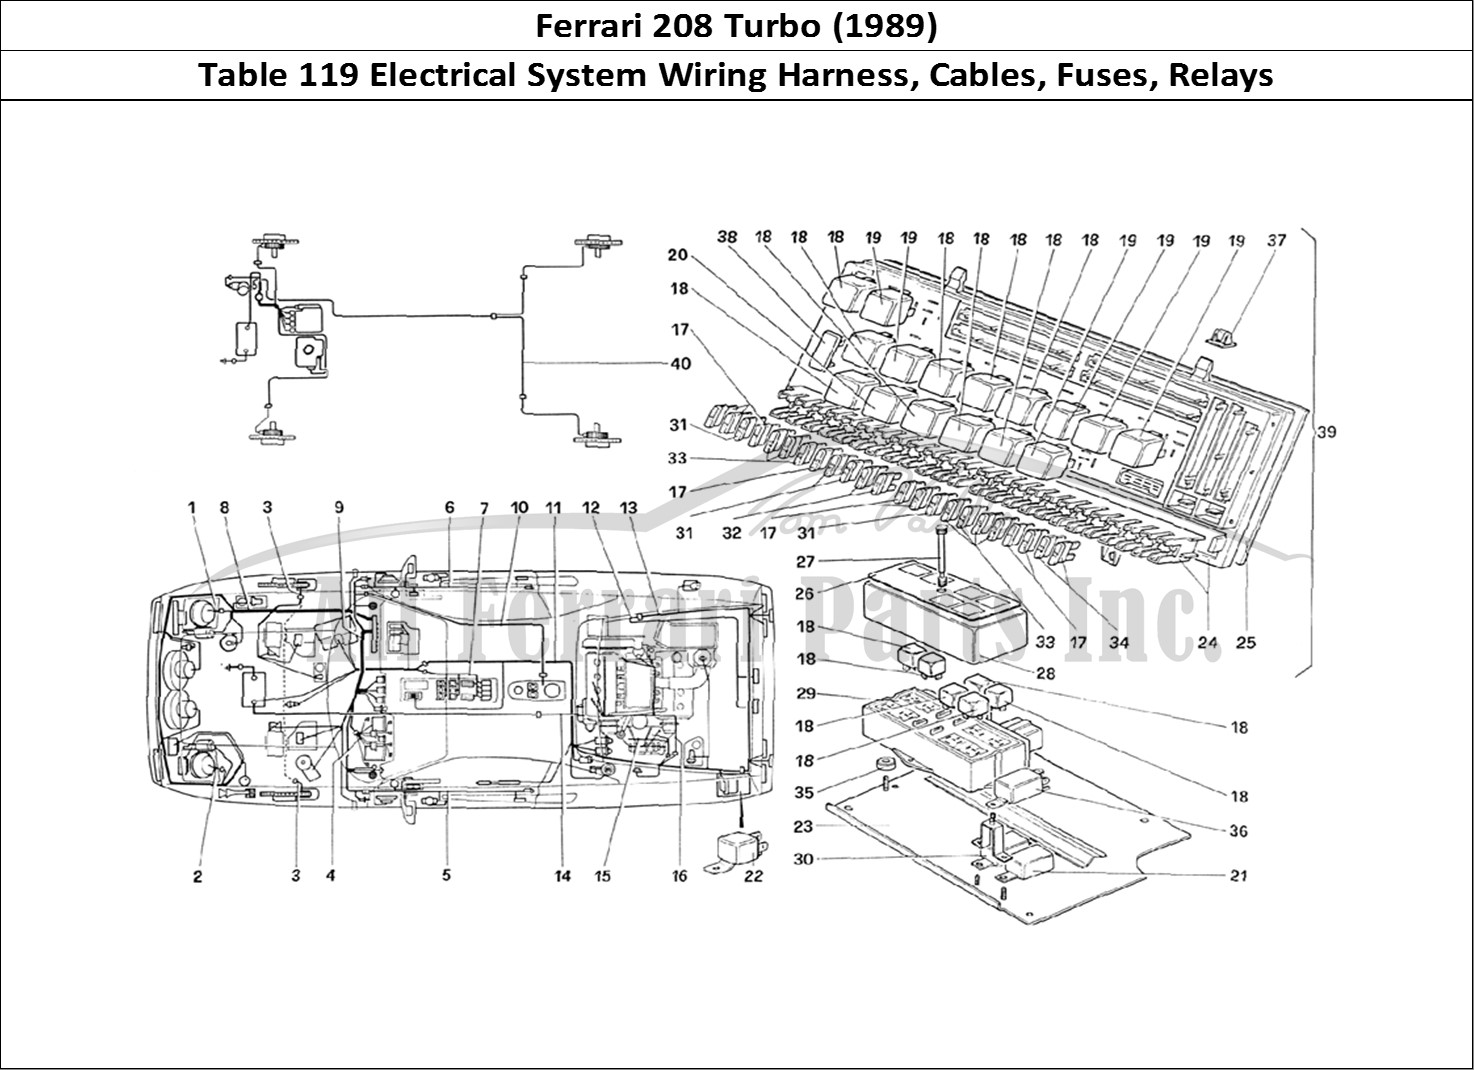 Ferrari Parts Ferrari 208 Turbo (1989) Page 119 Electrical System - Cable